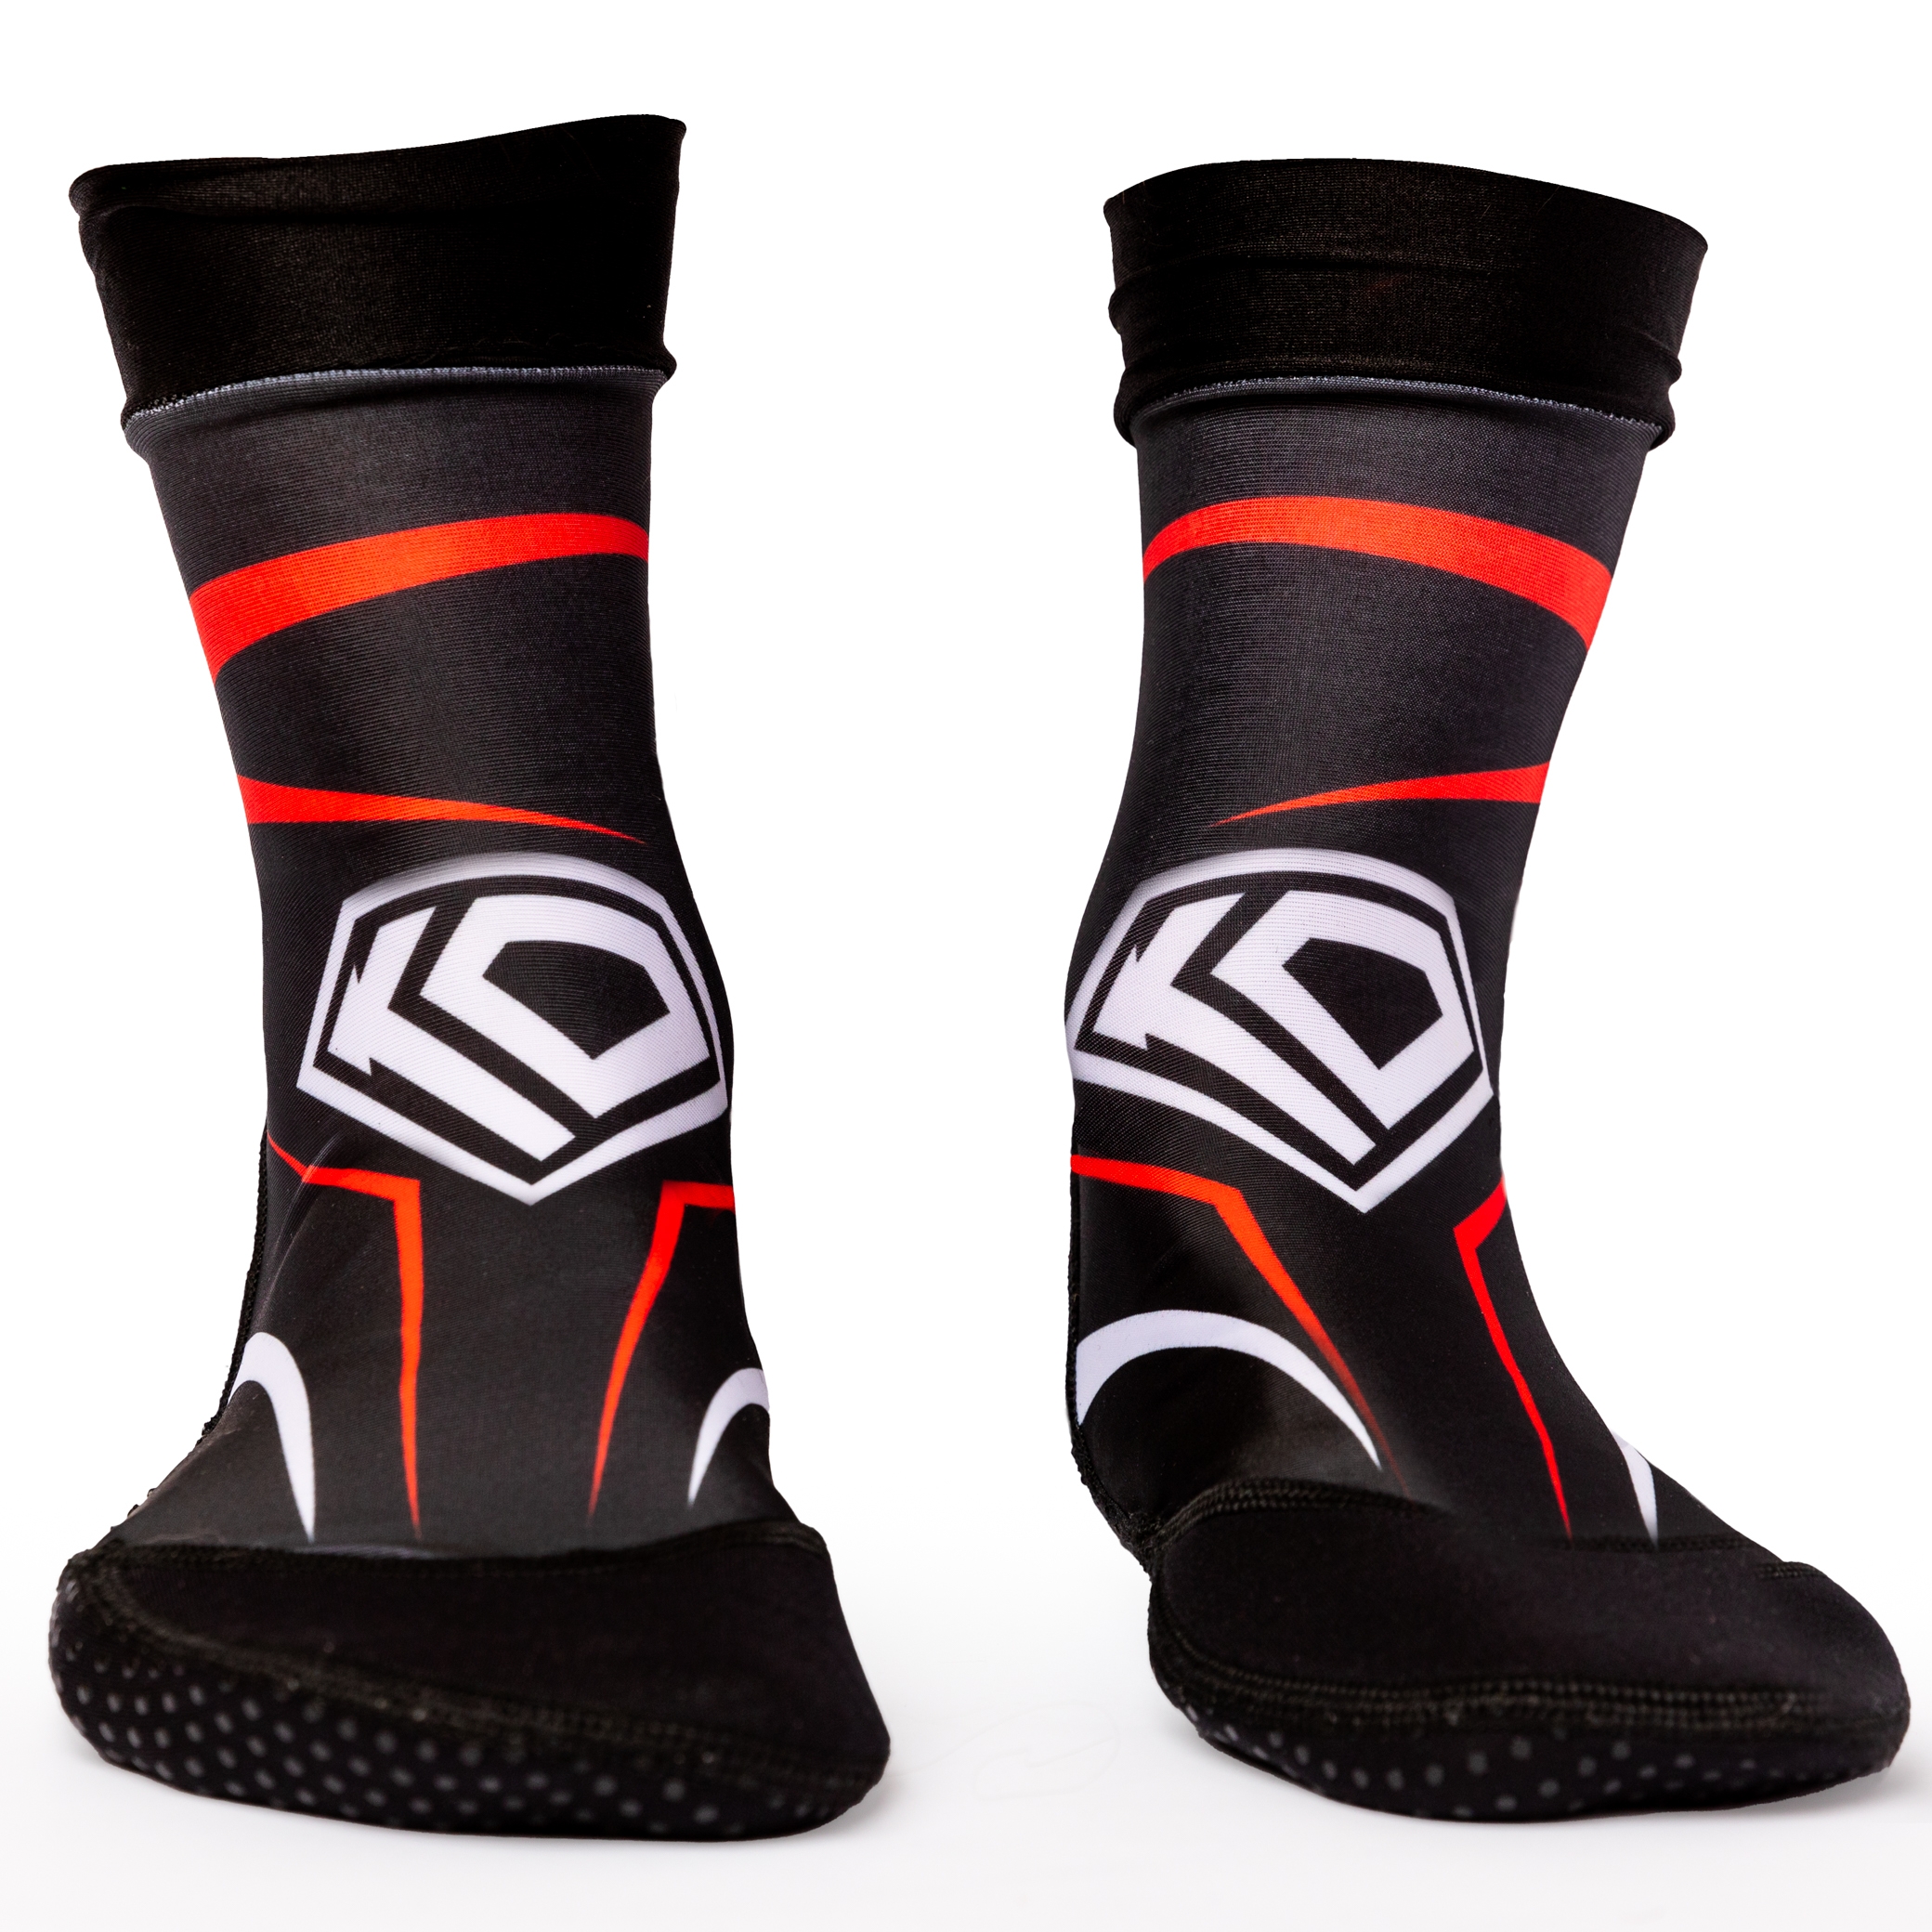 Unisex Grip Socks for Jiu Jitsu, MMA, Karate, Wrestling, Beach by KO Sports  Gear